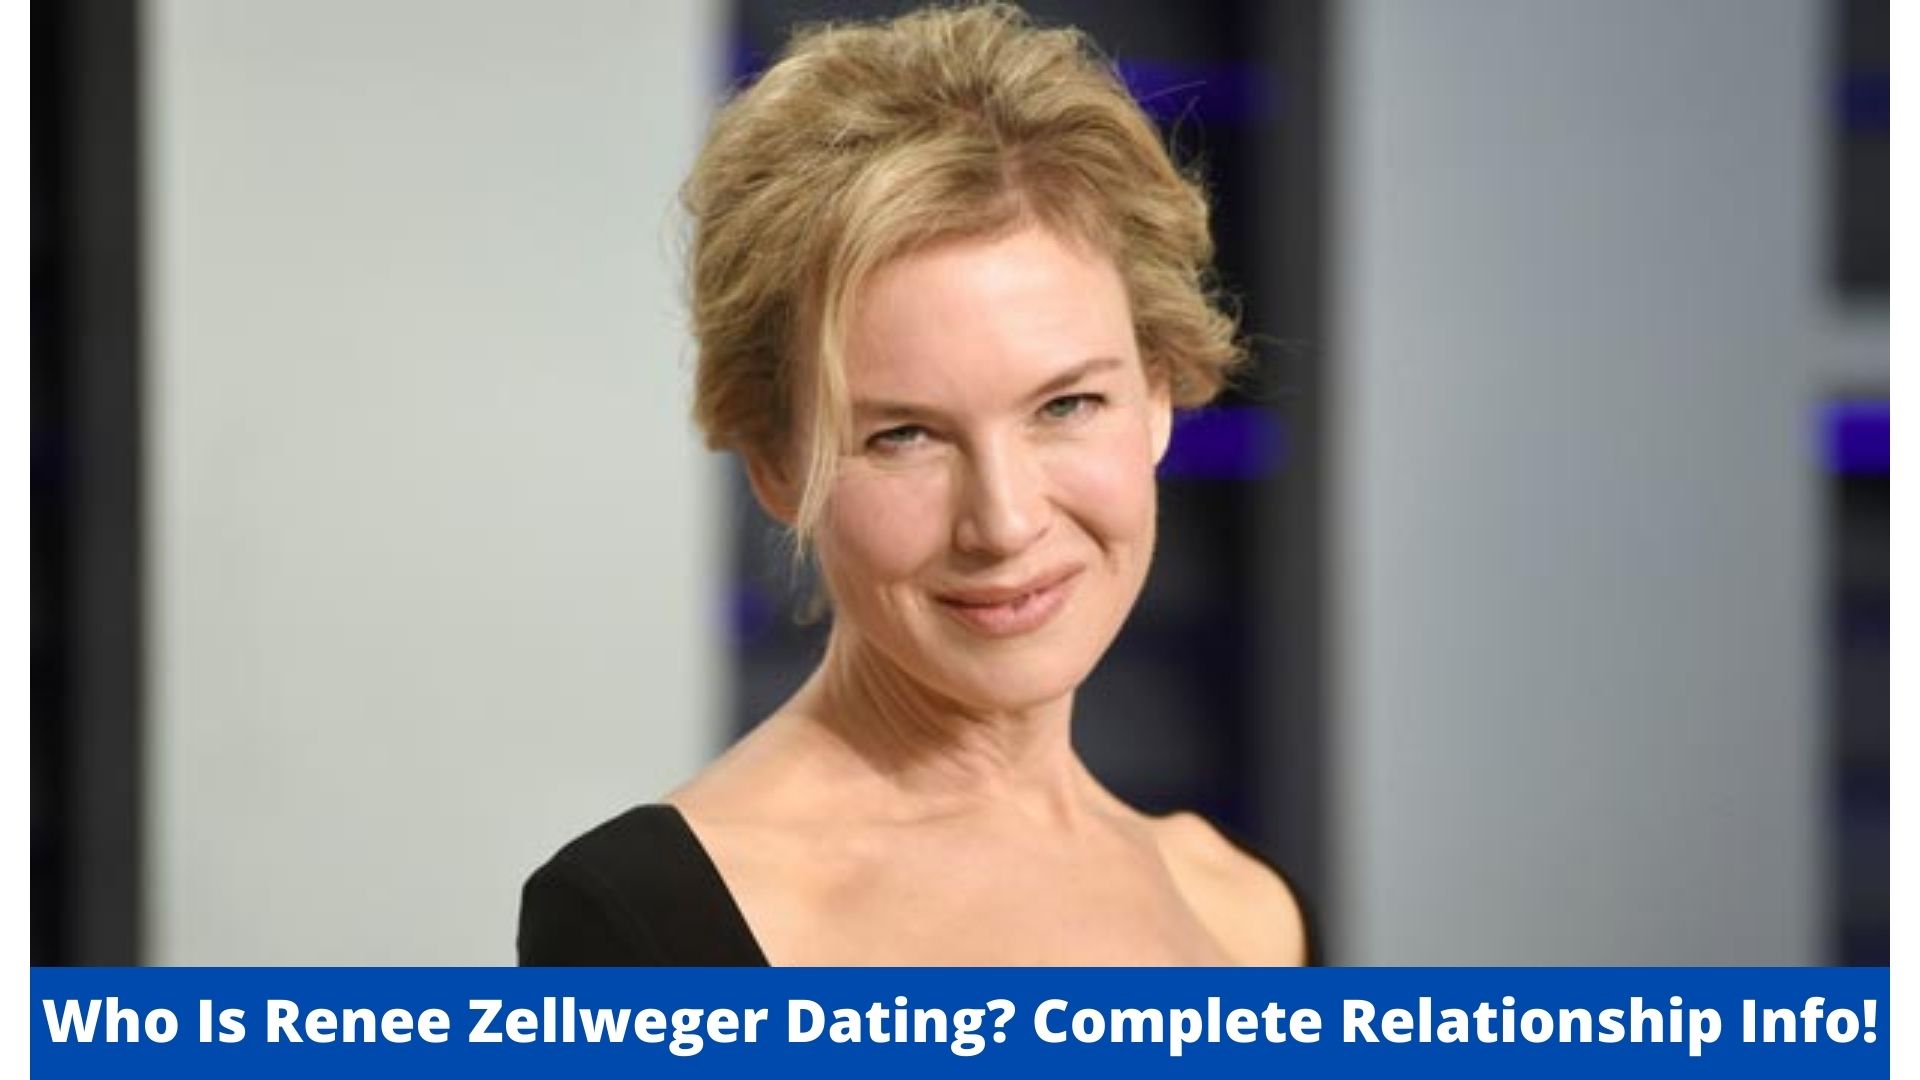 Who Is Renee Zellweger Dating? Complete Relationship Info!